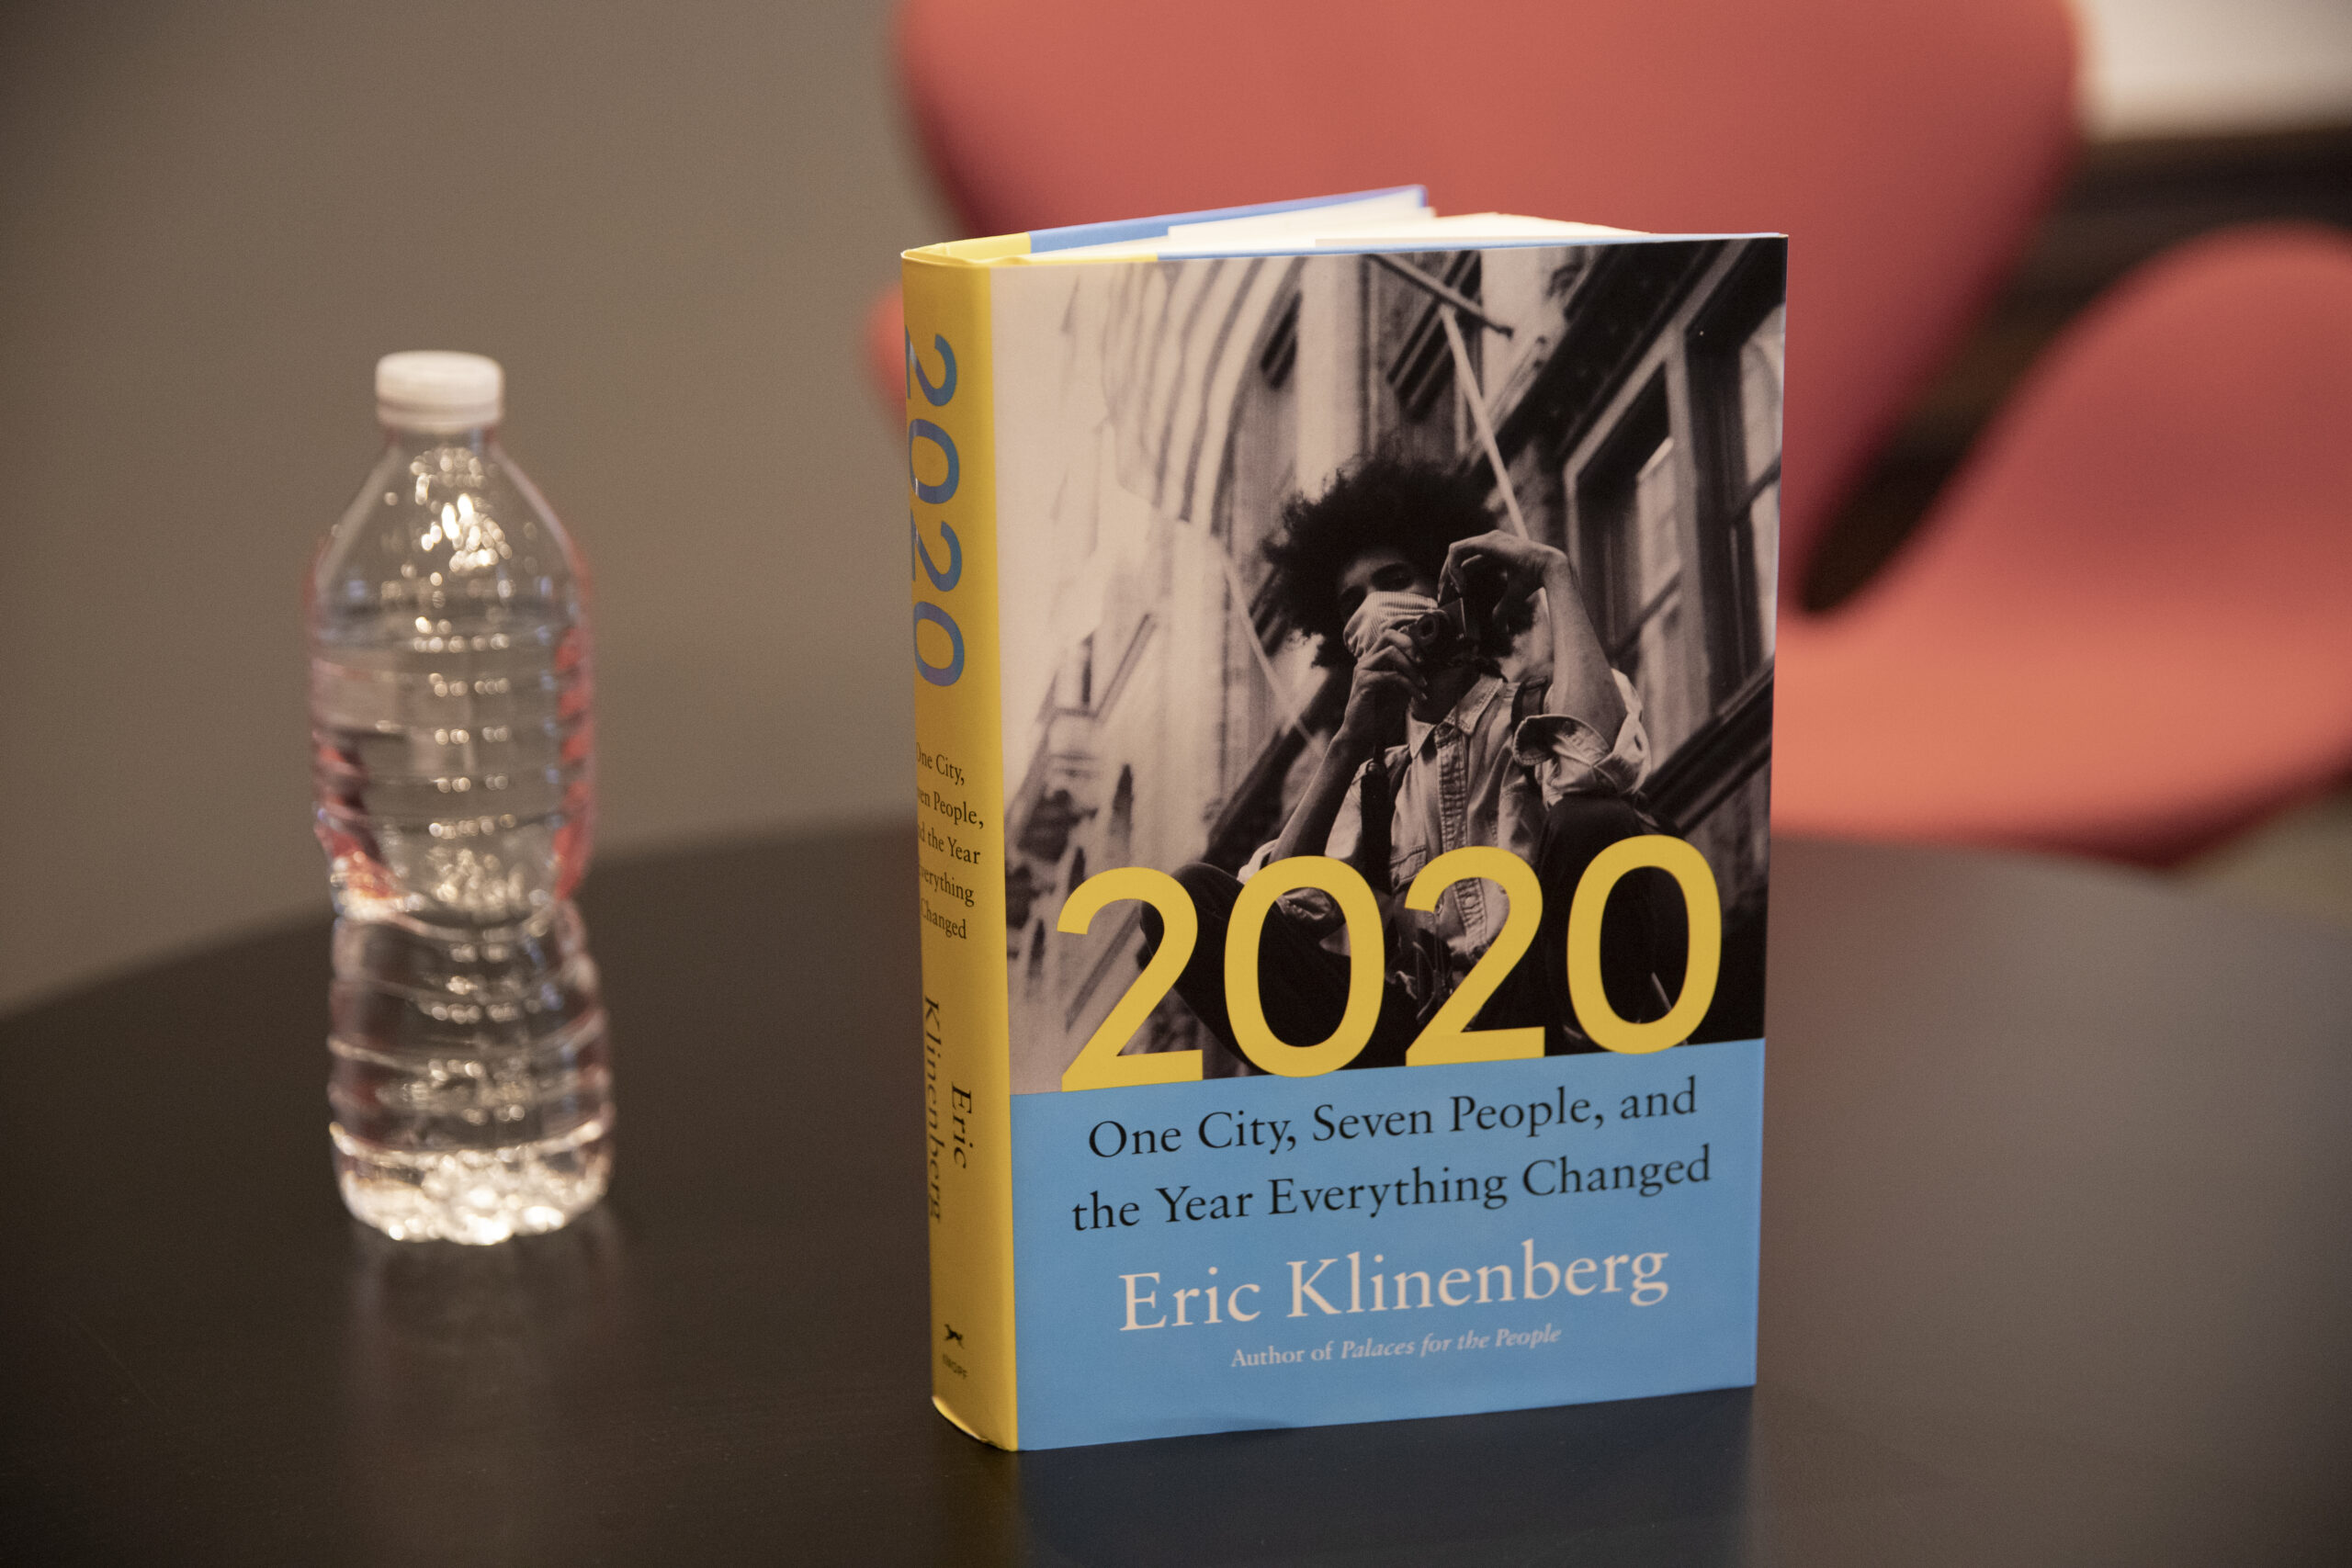 Eric Klinenberg’s 2020 at his book launch